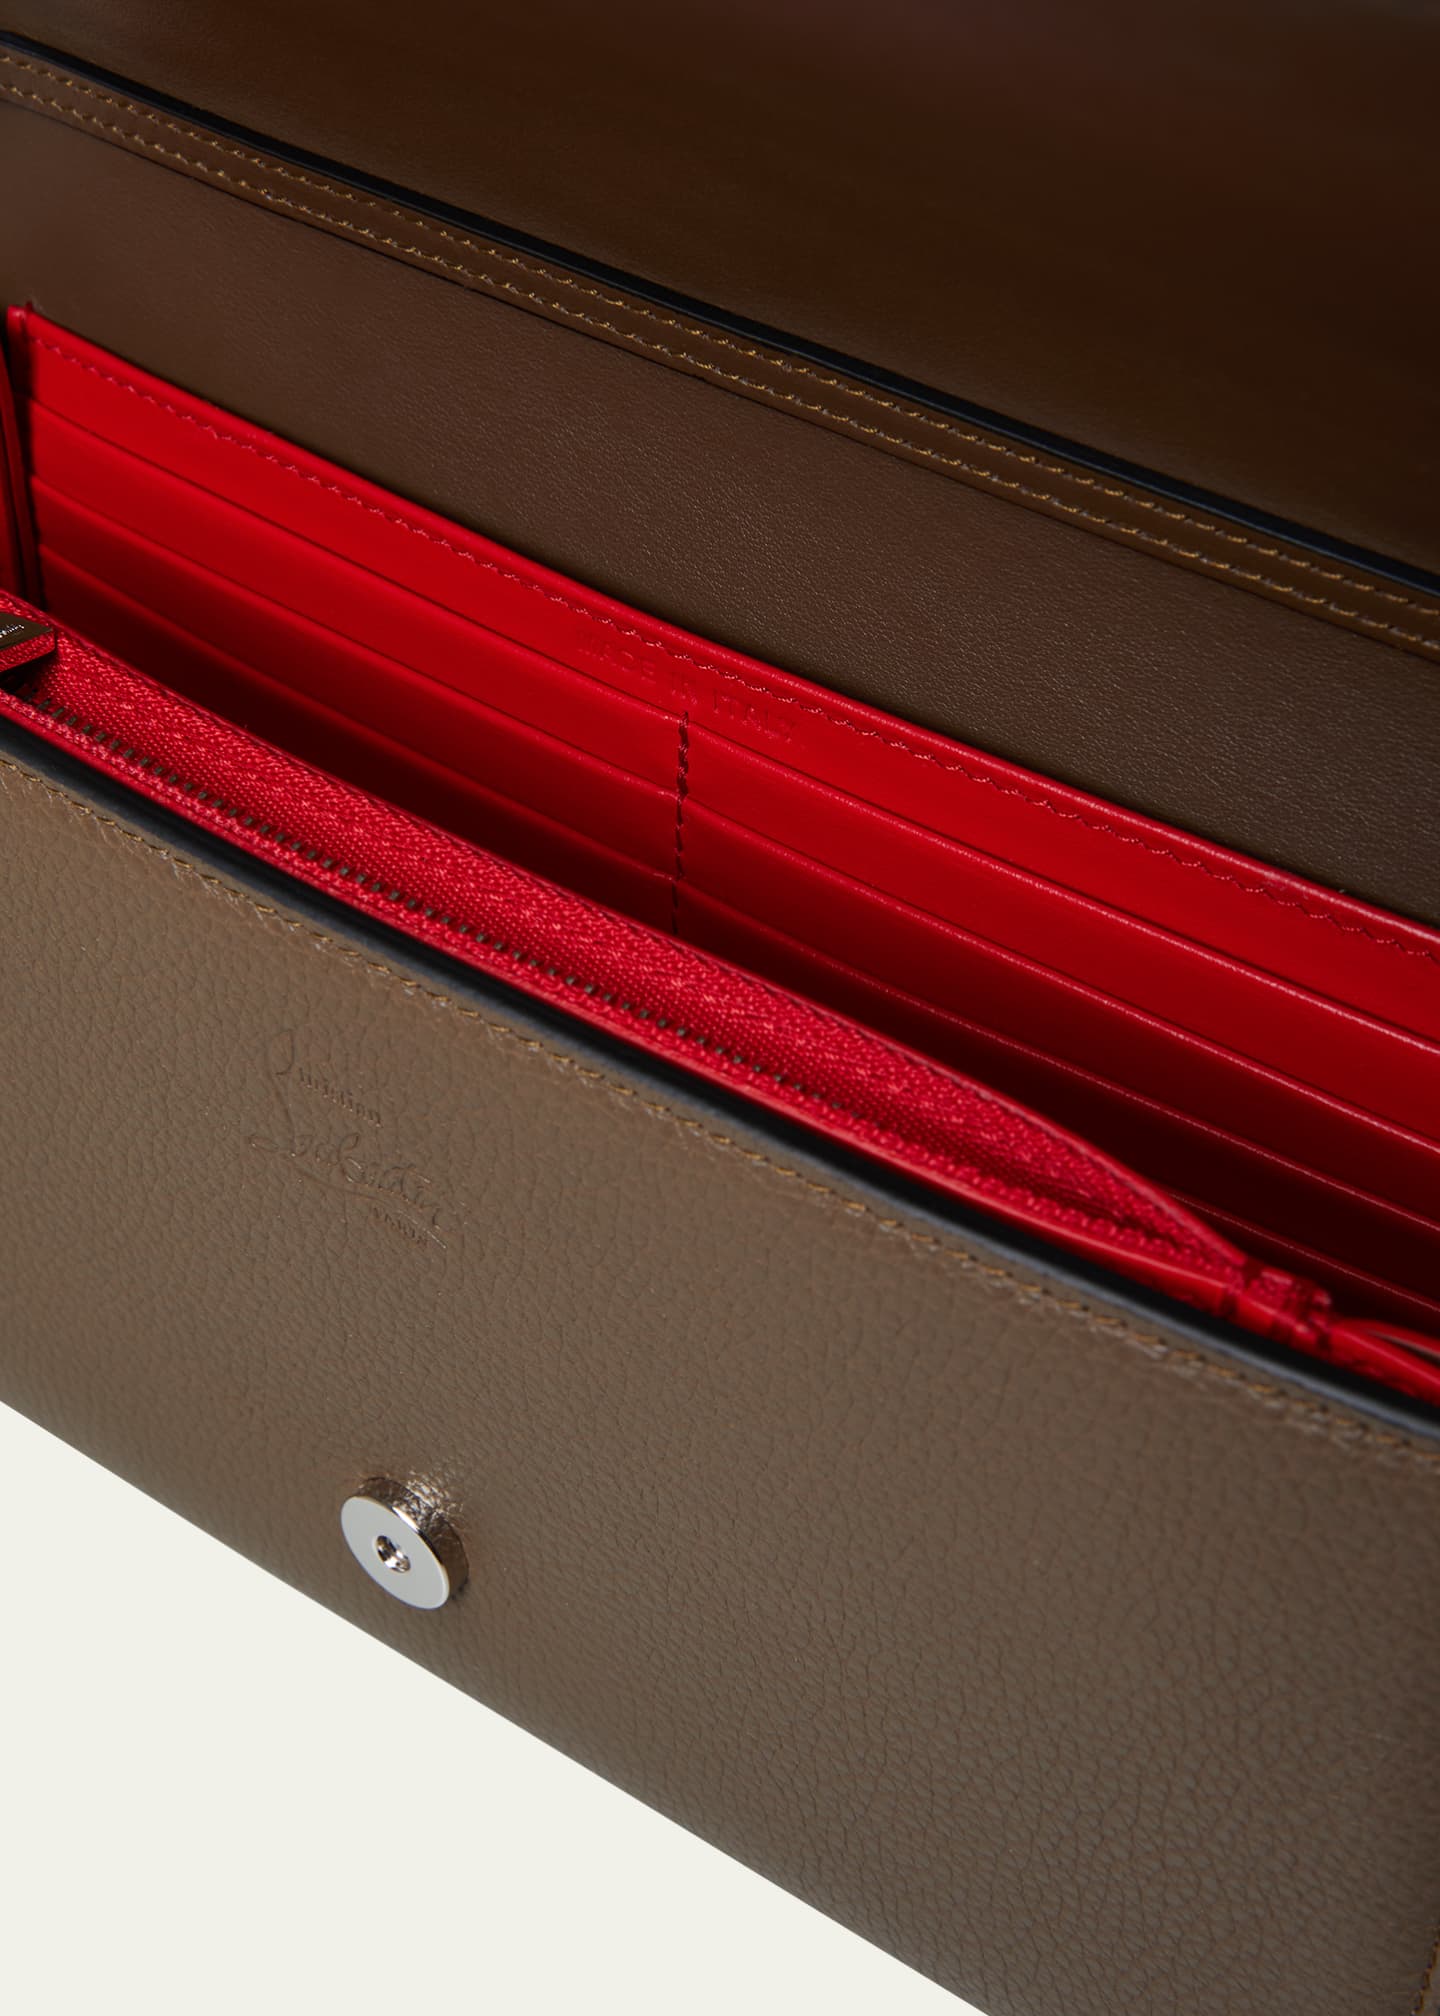 Louboutin Paloma Fold-Over Embellished Clutch Bag w/ Box - Boca